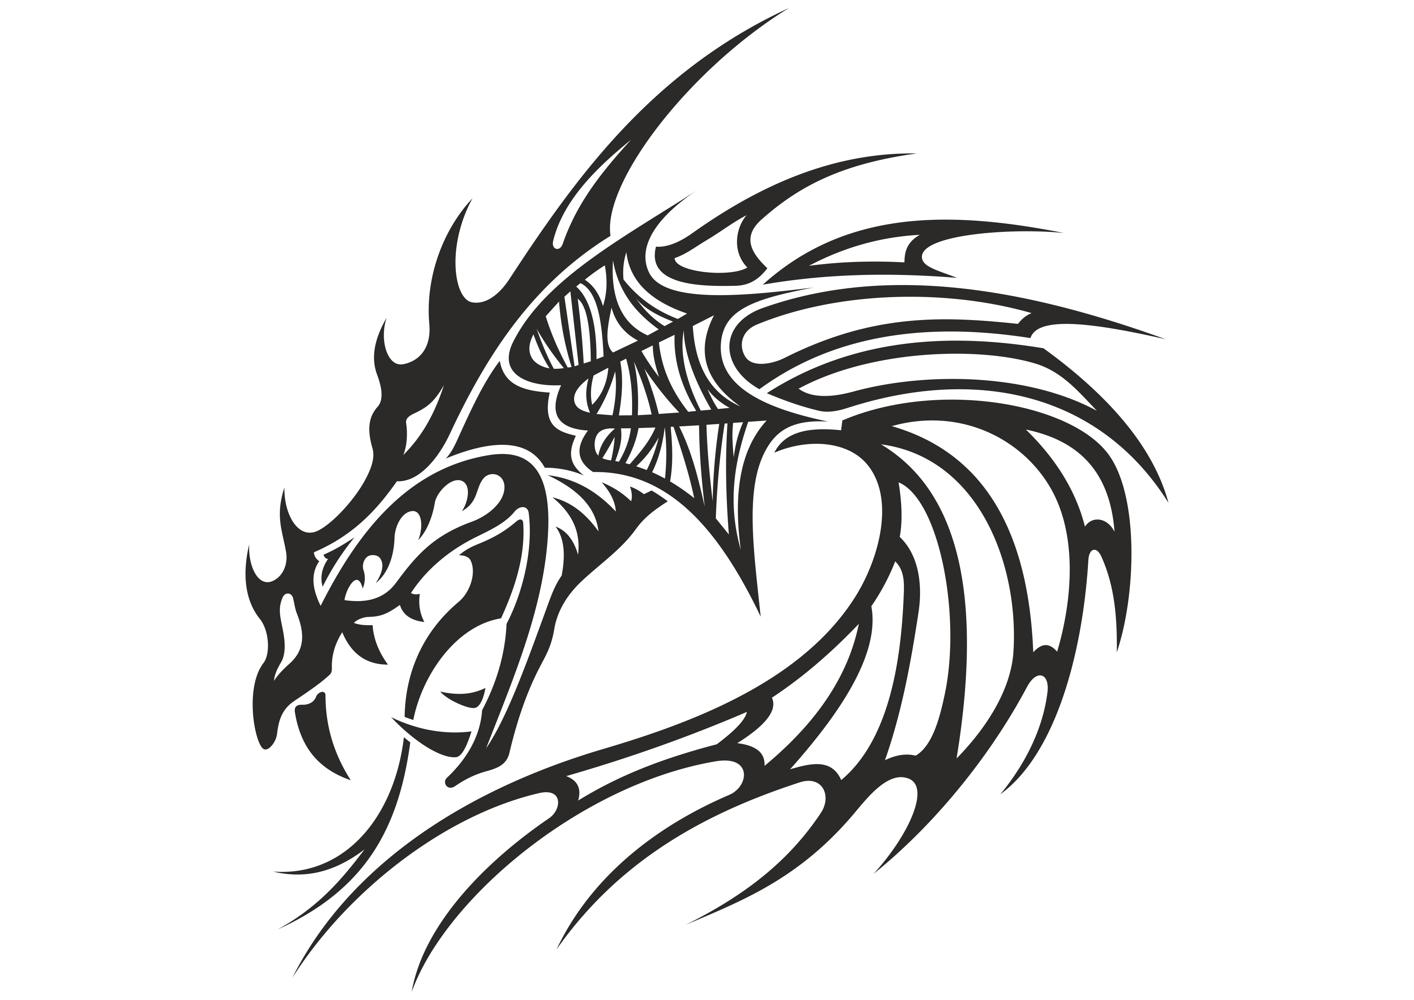 चीनी ड्रैगन सिर टैटू वेक्टर